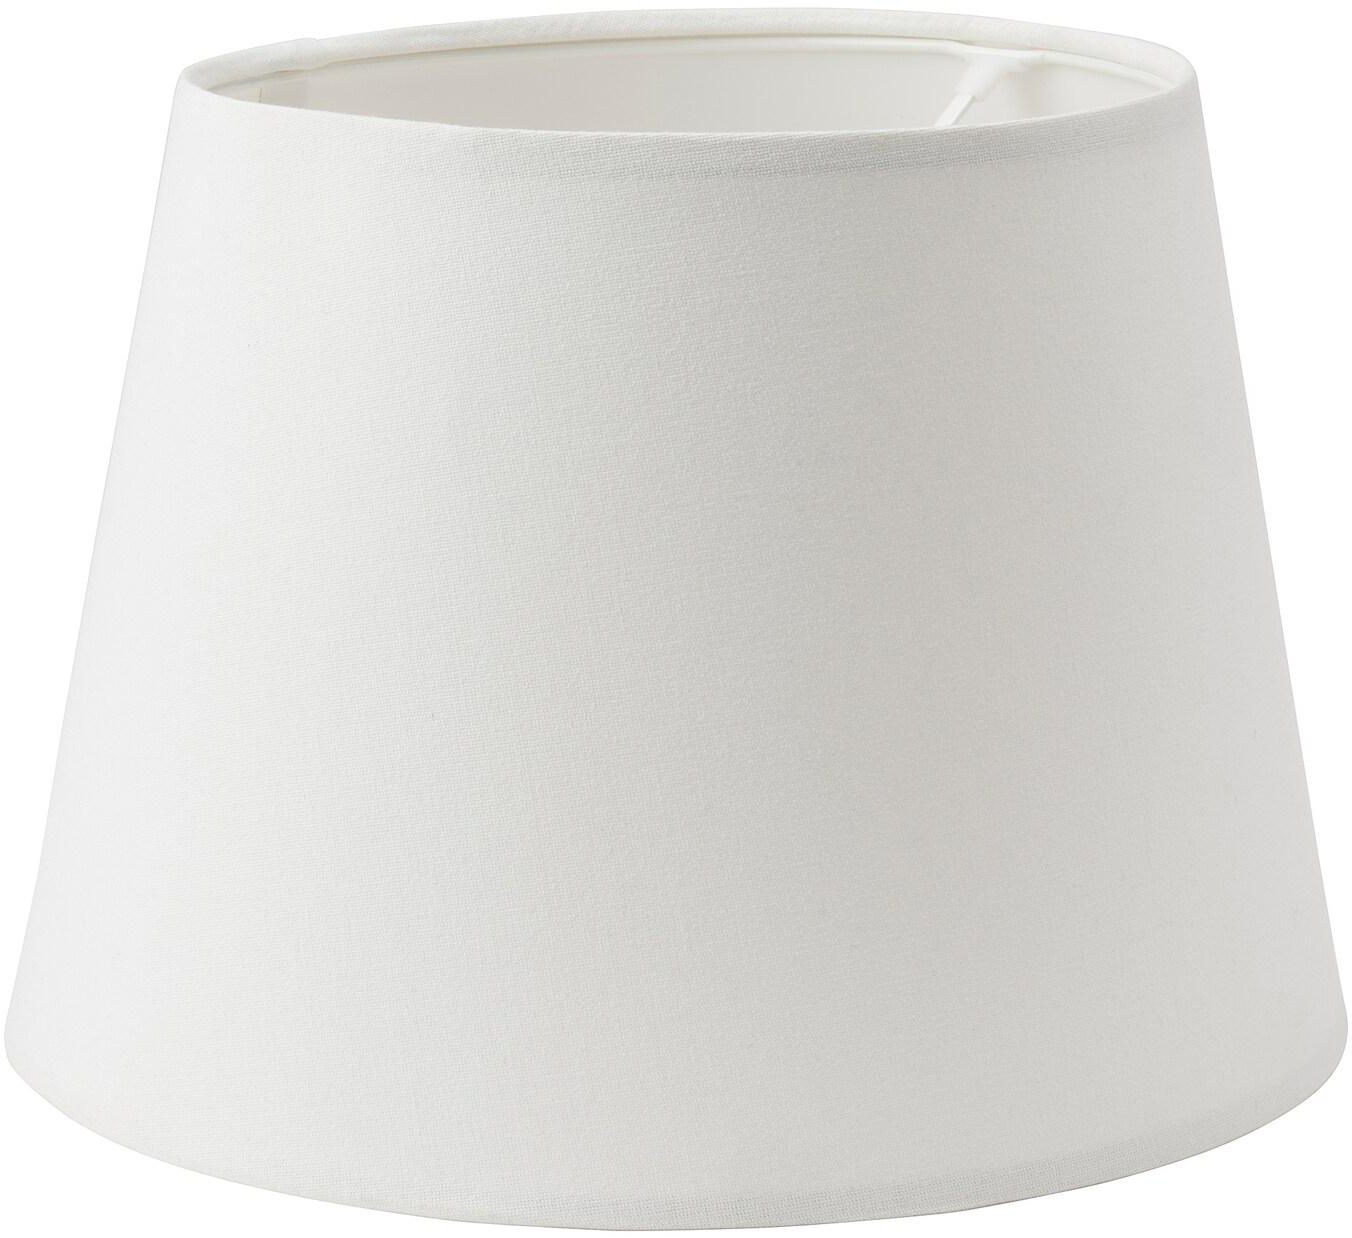 SKOTTORP Lamp shade - white 33 cm